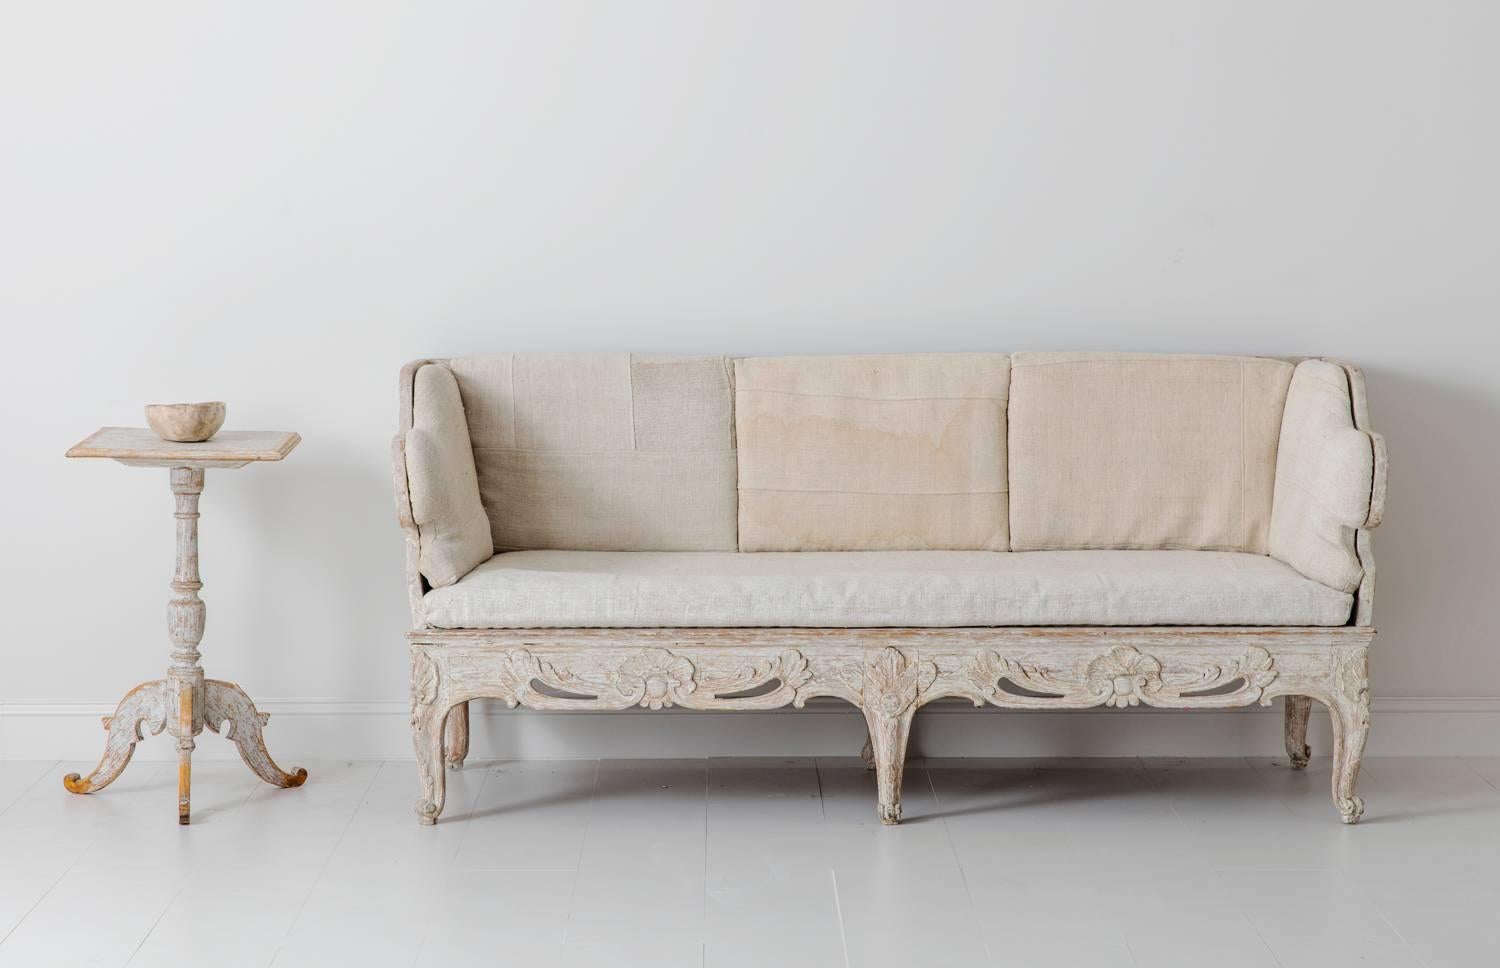 18th Century Swedish Rococo Period Trag Sofa Bench in Original Paint For Sale 3